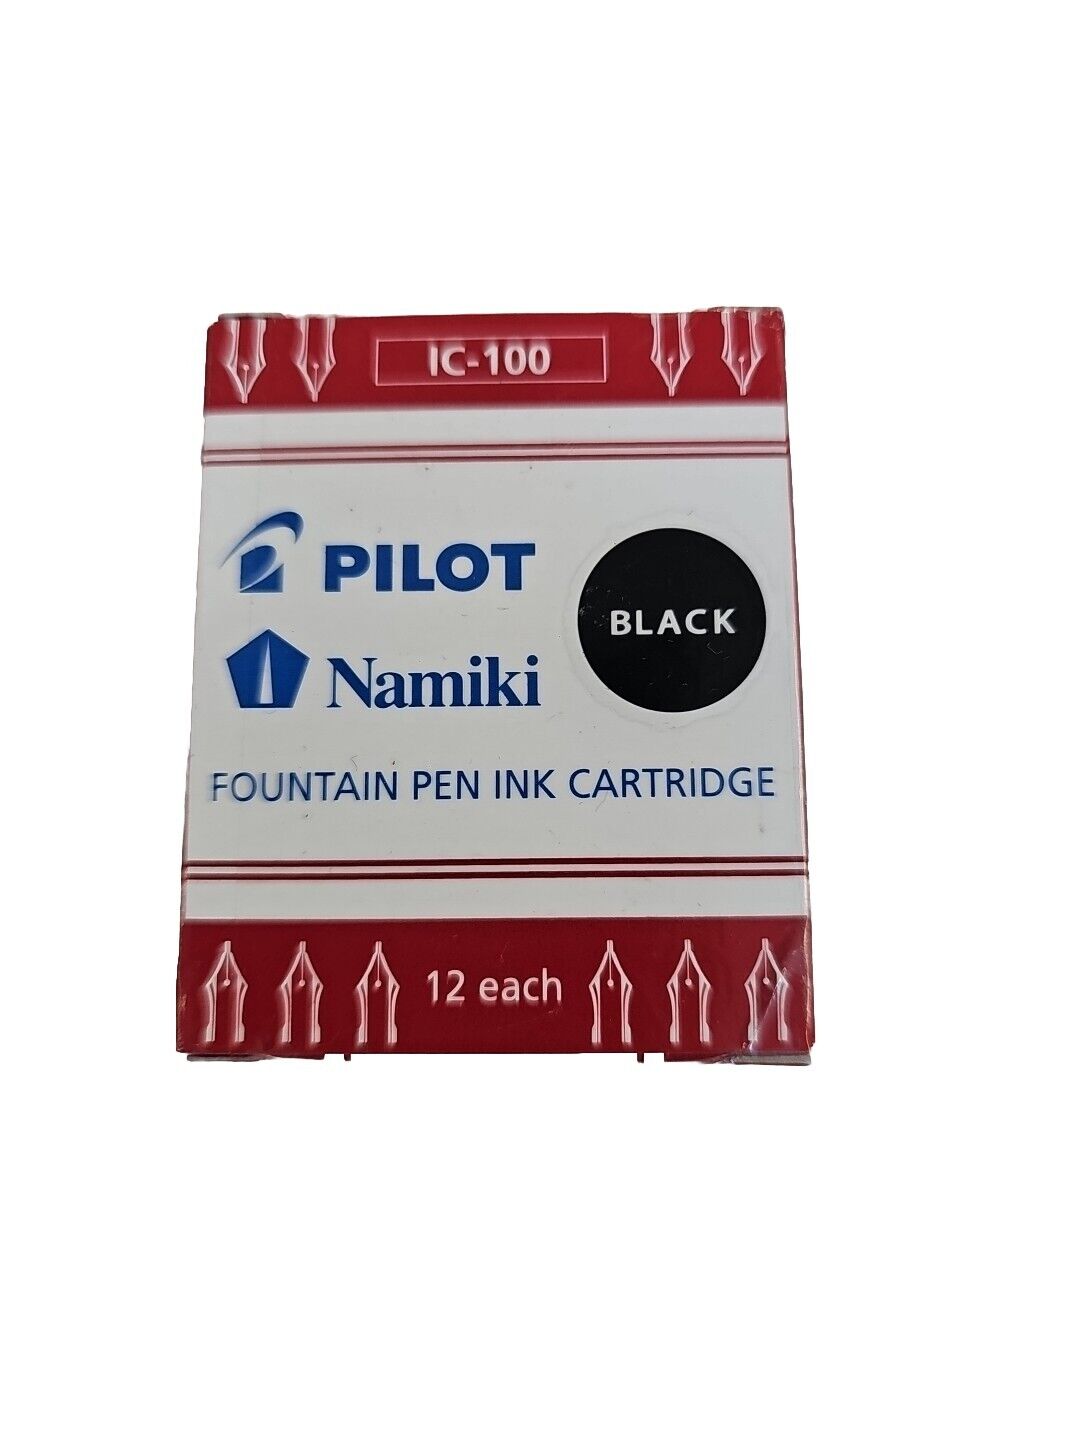 Pilot 69100 Namiki Fountain Pen Ink Cartridge IC-100, Black Ink, Pack of 12